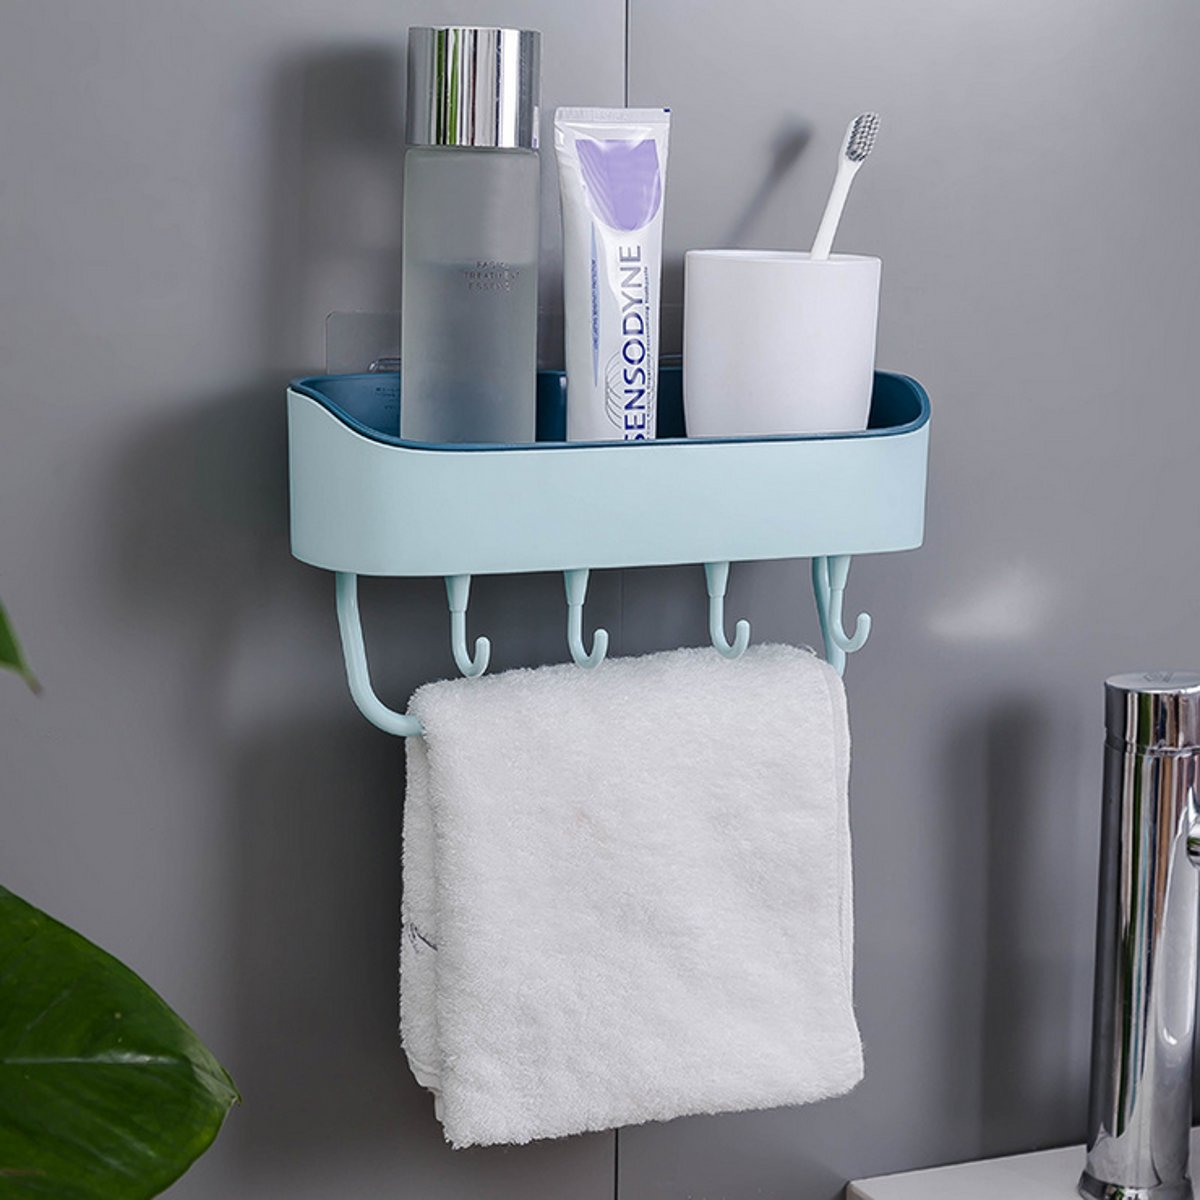 Self-adhesive-Wall-Hanging-Storage-Rack-Shelf-Hook-Home-Kitchen-Holder-Organizer-Towel-Holder-1552900-5